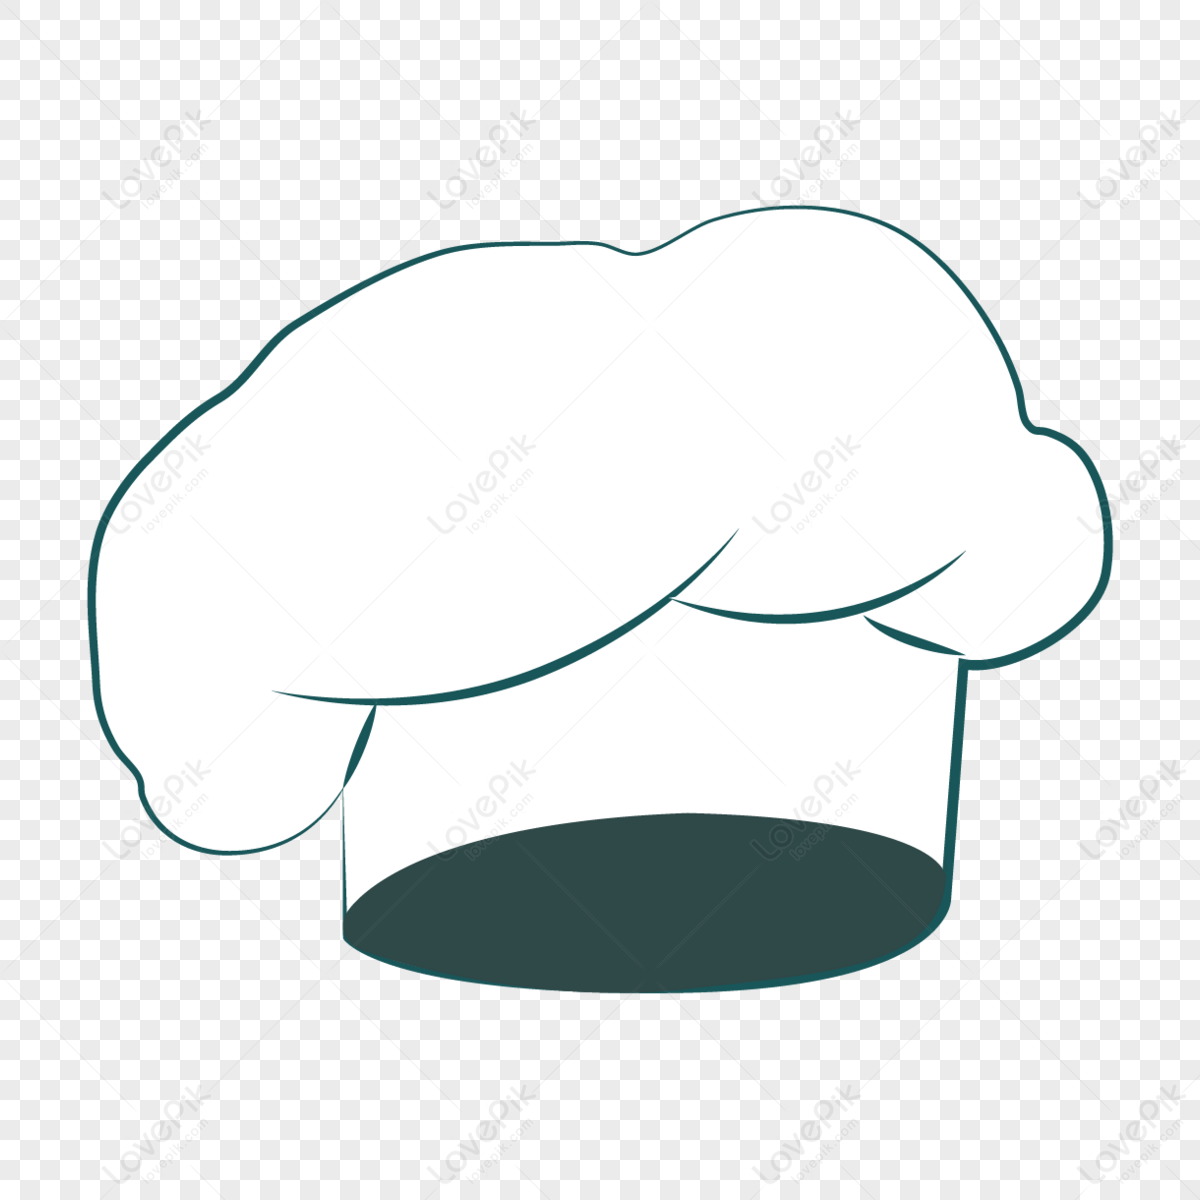 Black And White Vector Cartoon Chef Hat Sticker,hat Illustration ...